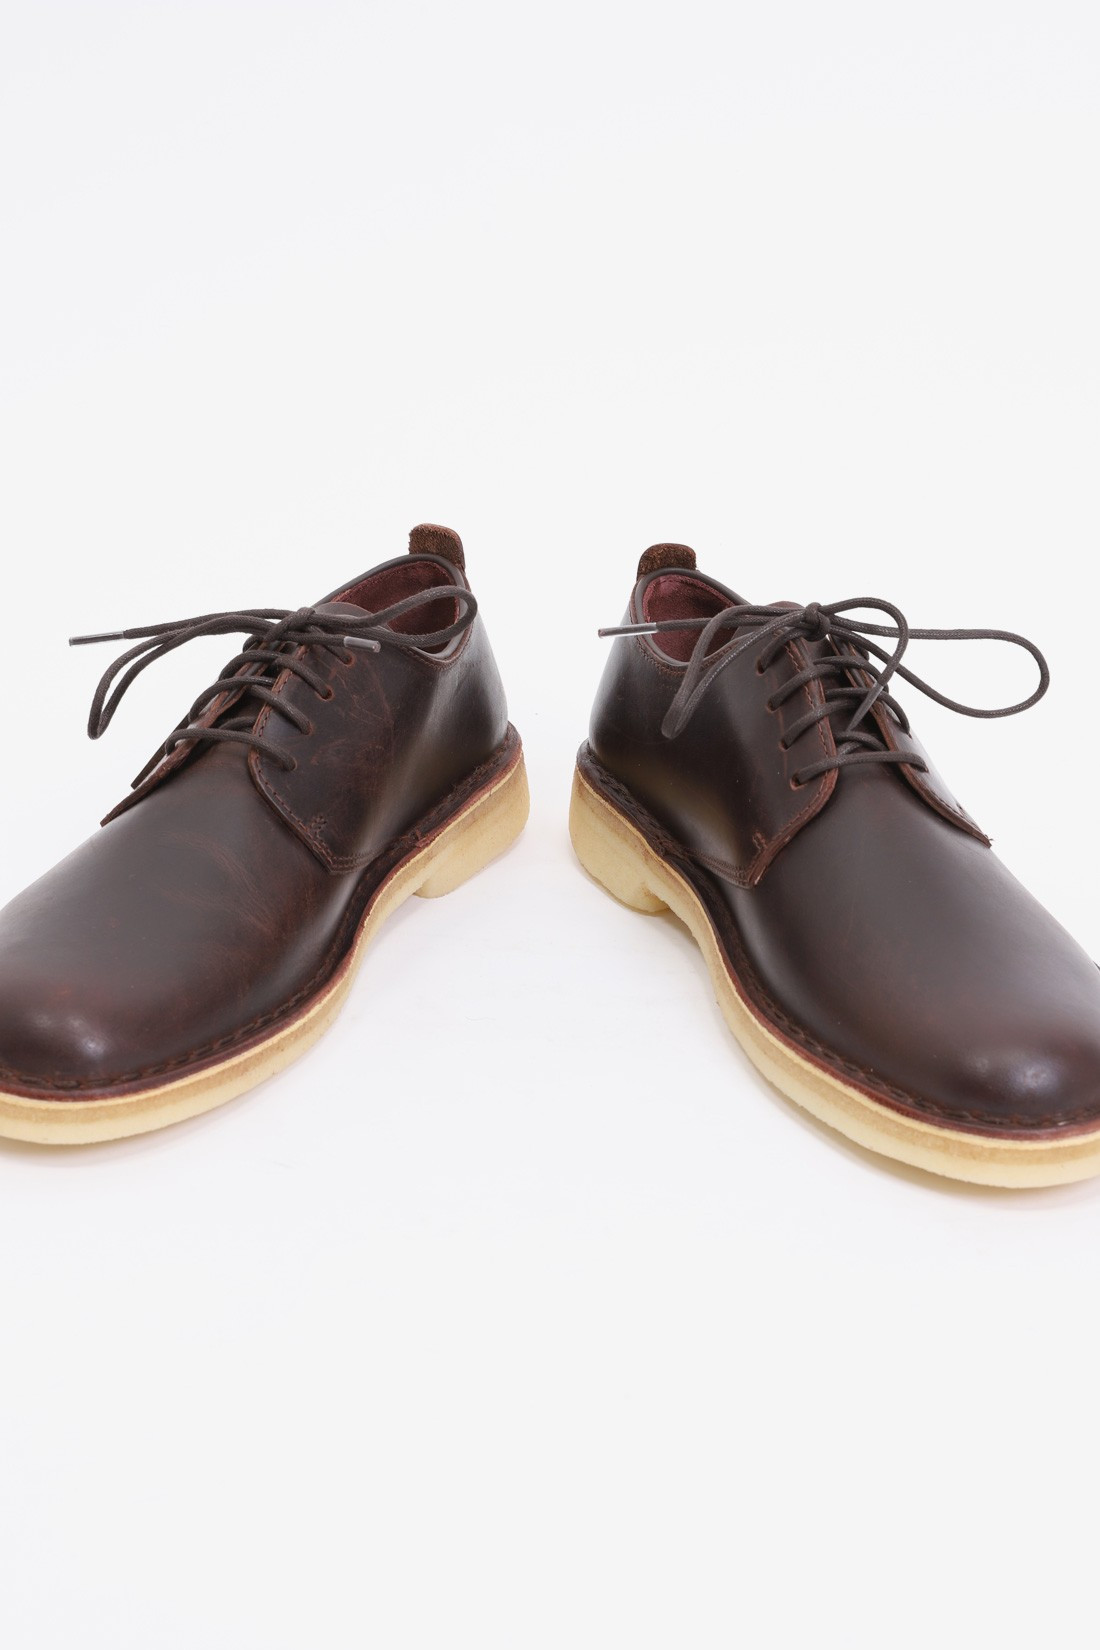 CLARKS ORIGINALS / Desert london Chestnut leather